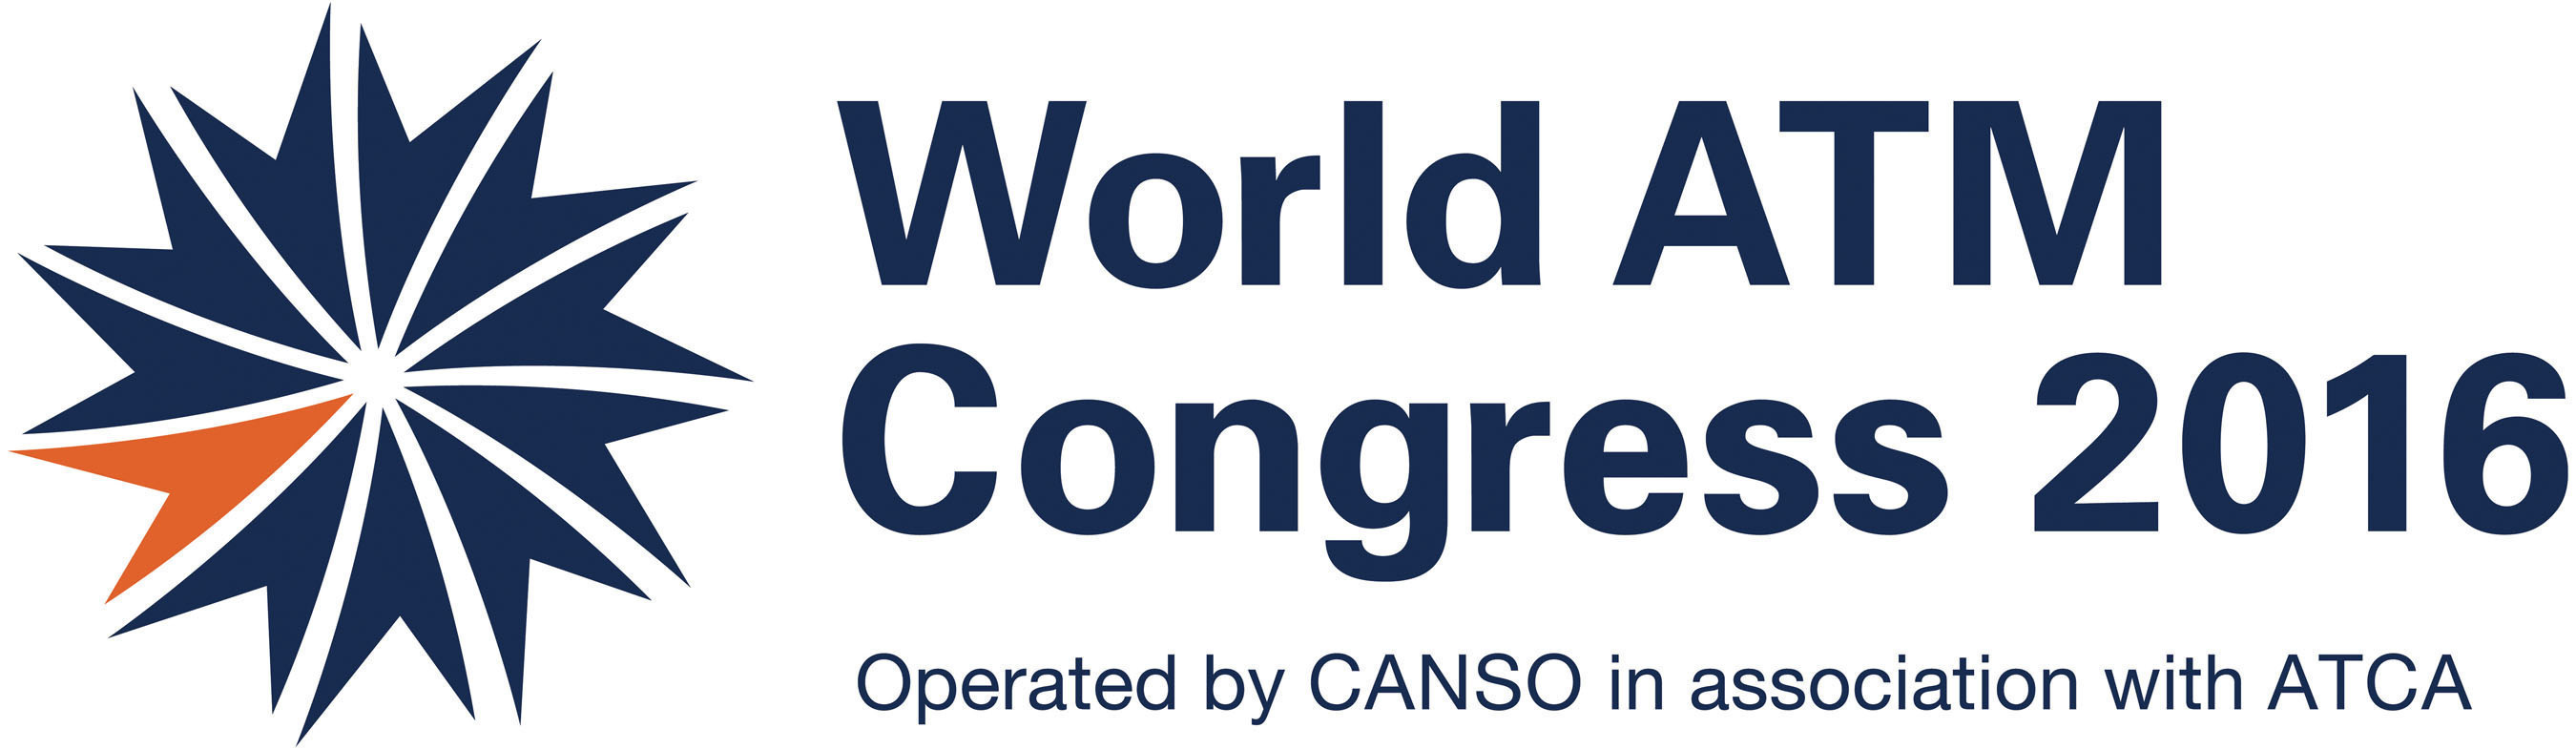 World ATM Congress 2016 official logo (PRNewsFoto/World ATM Congress)